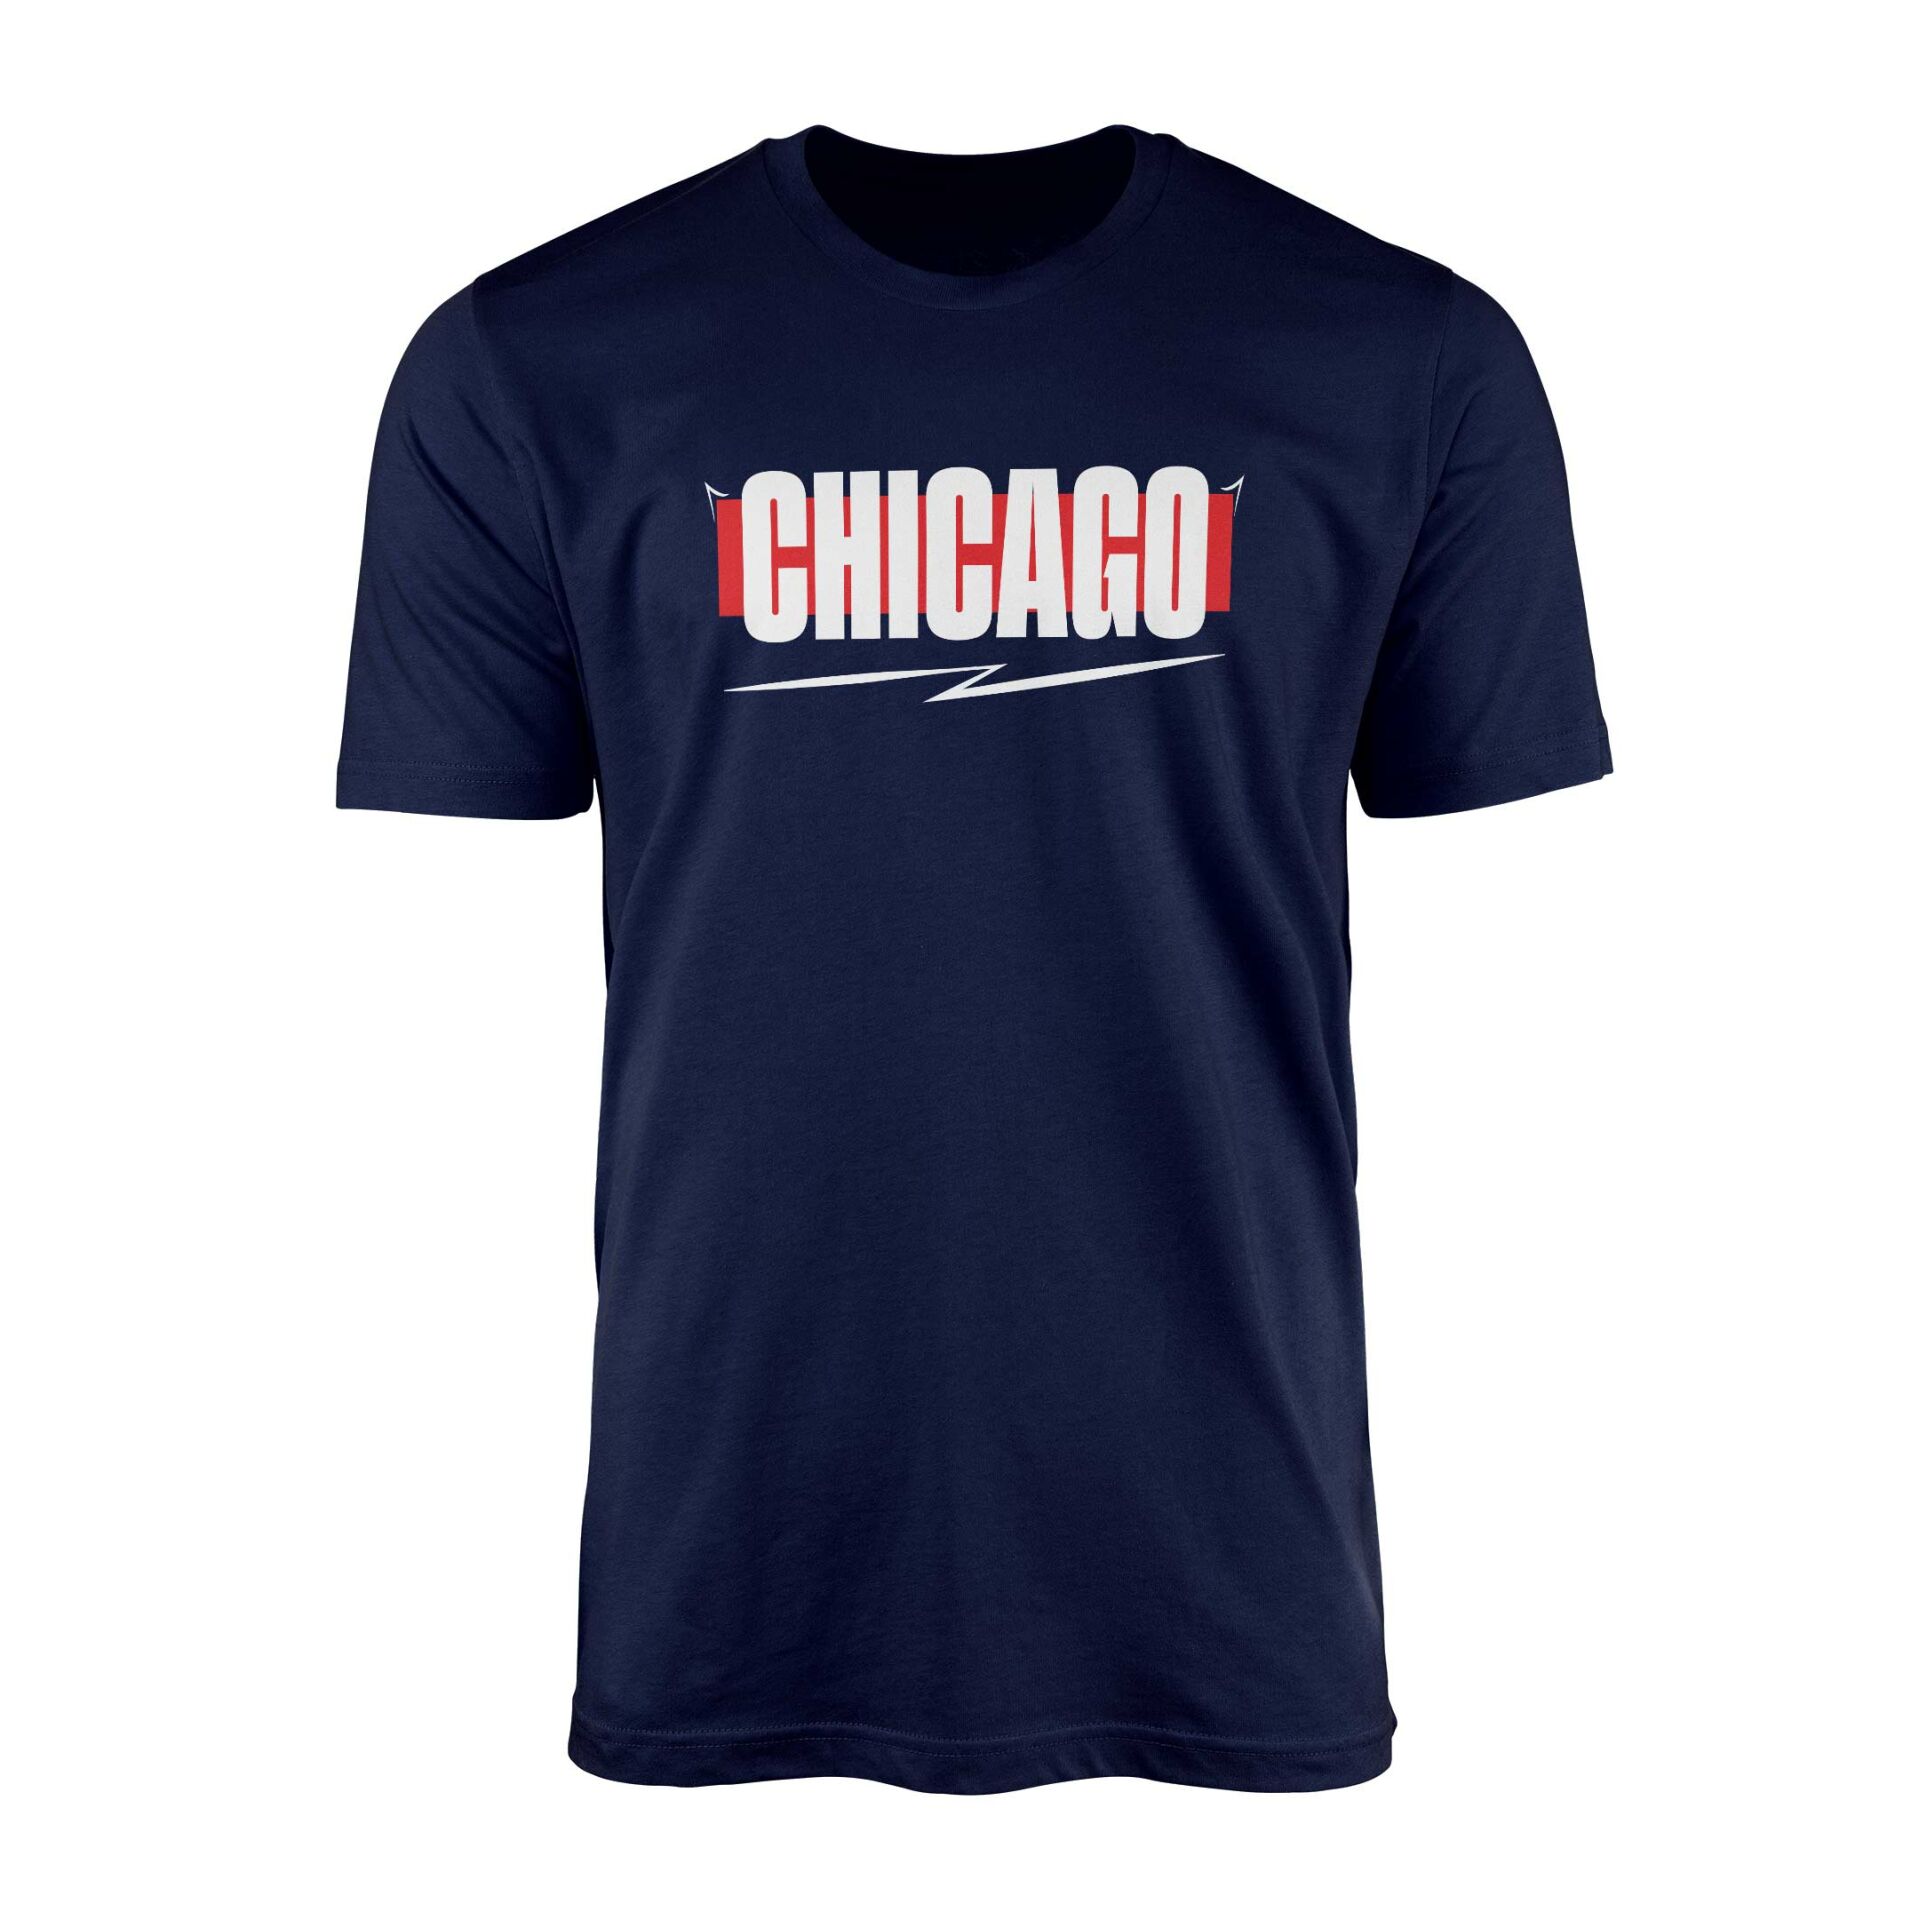 Chicago Lacivert Tişört